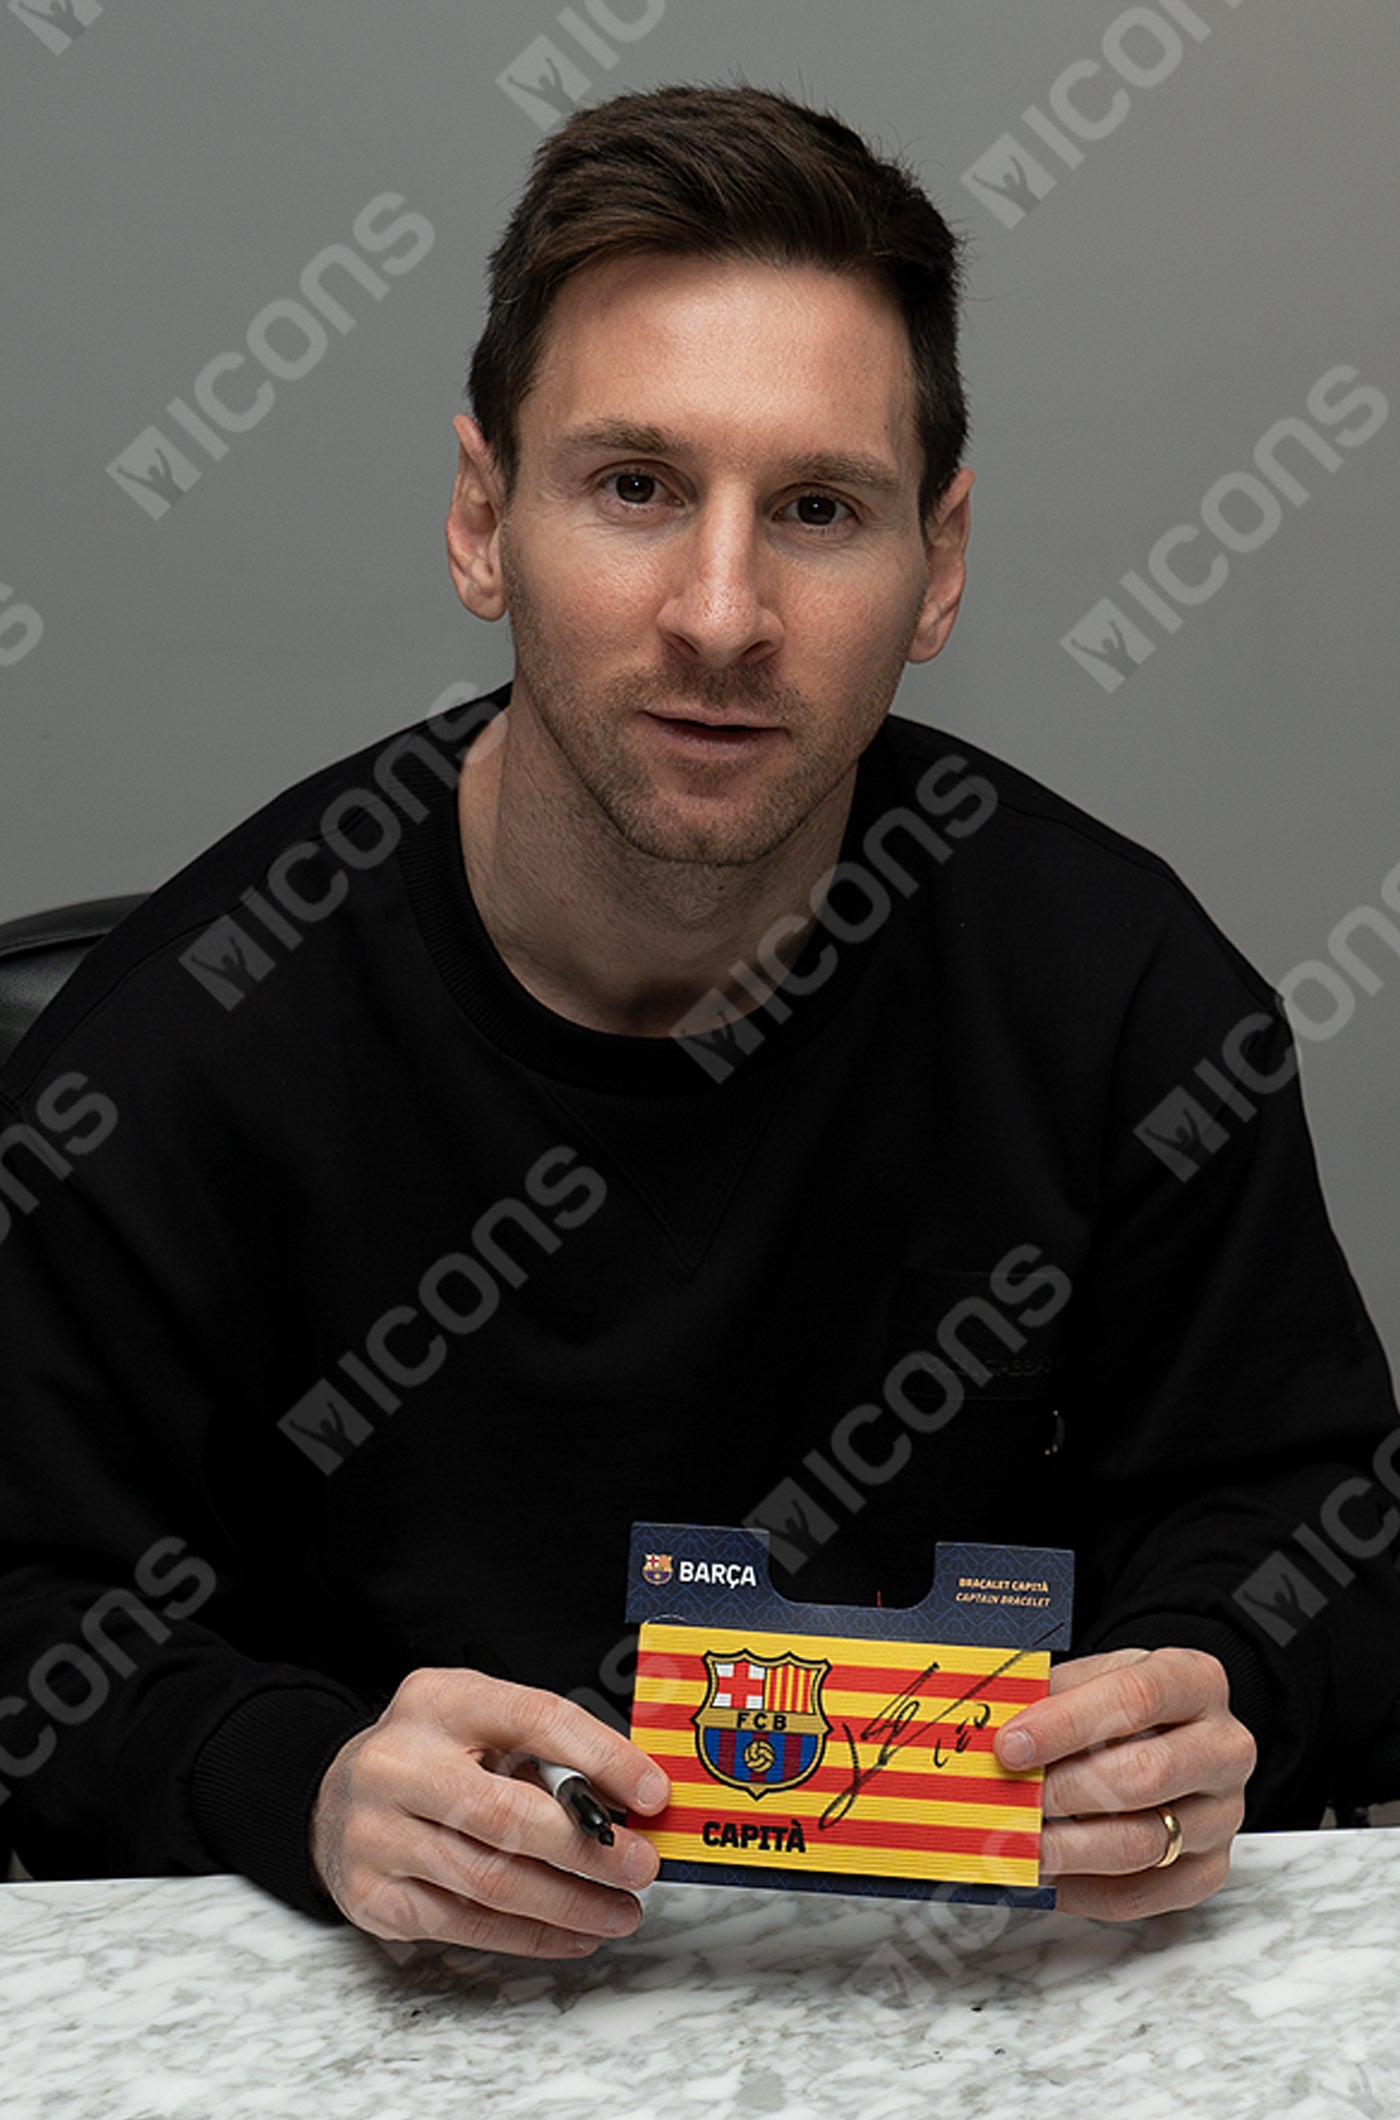 Brazalete de capitán oficial del FC Barcelona firmado por Xavi - Enmarcado